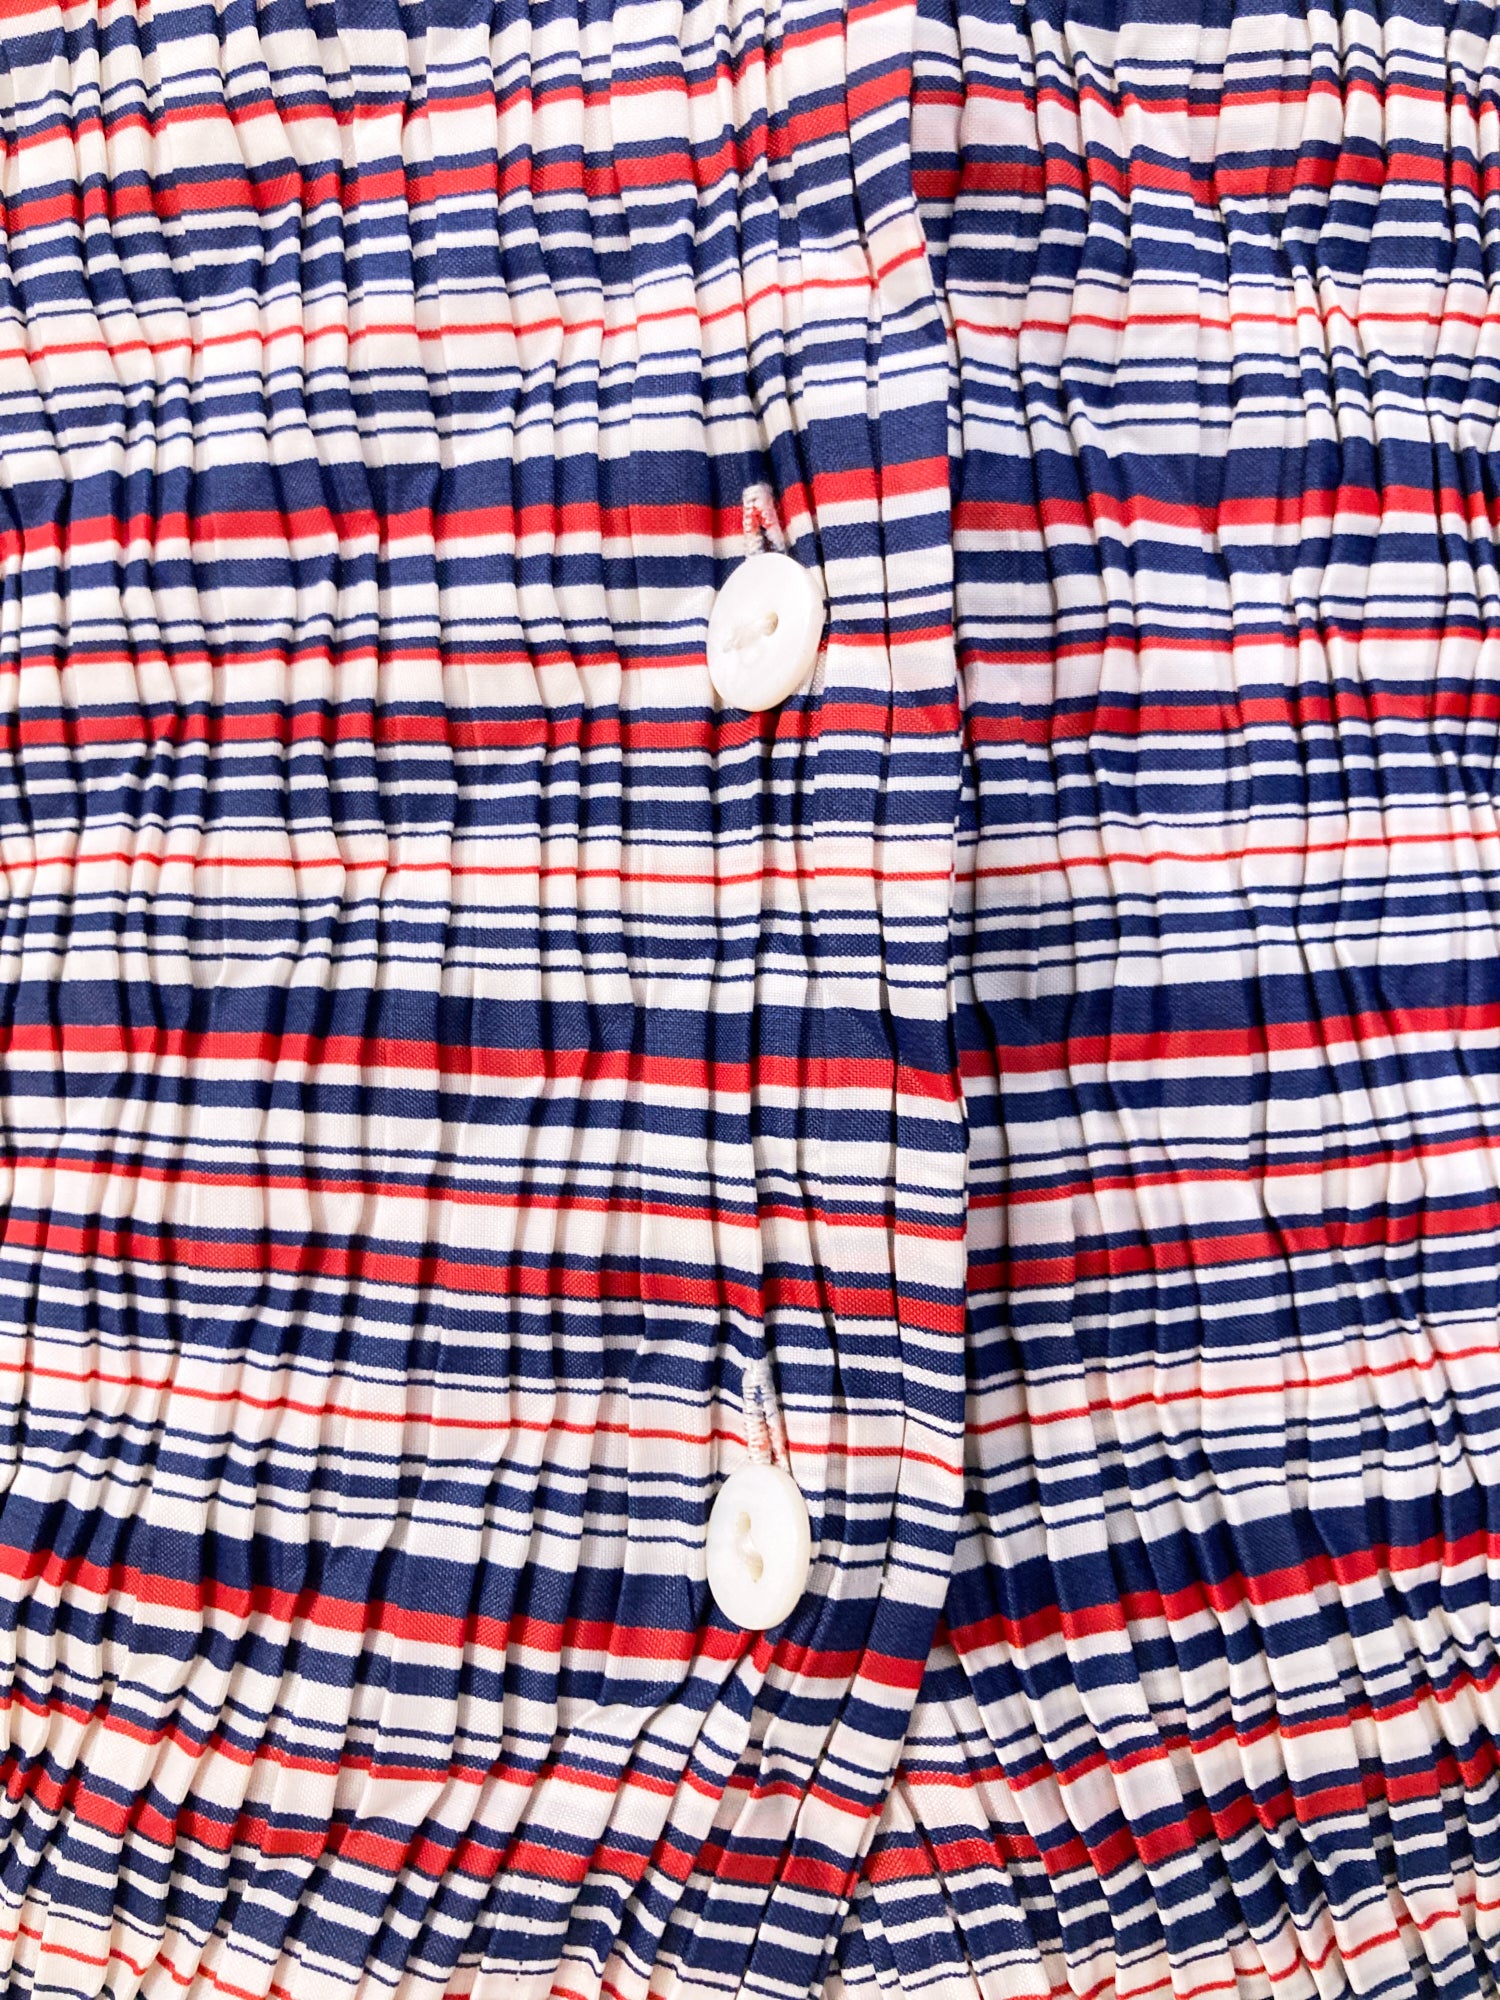 Wrinqle Inoue Pleats blue red white stripe pleated polyester shirt